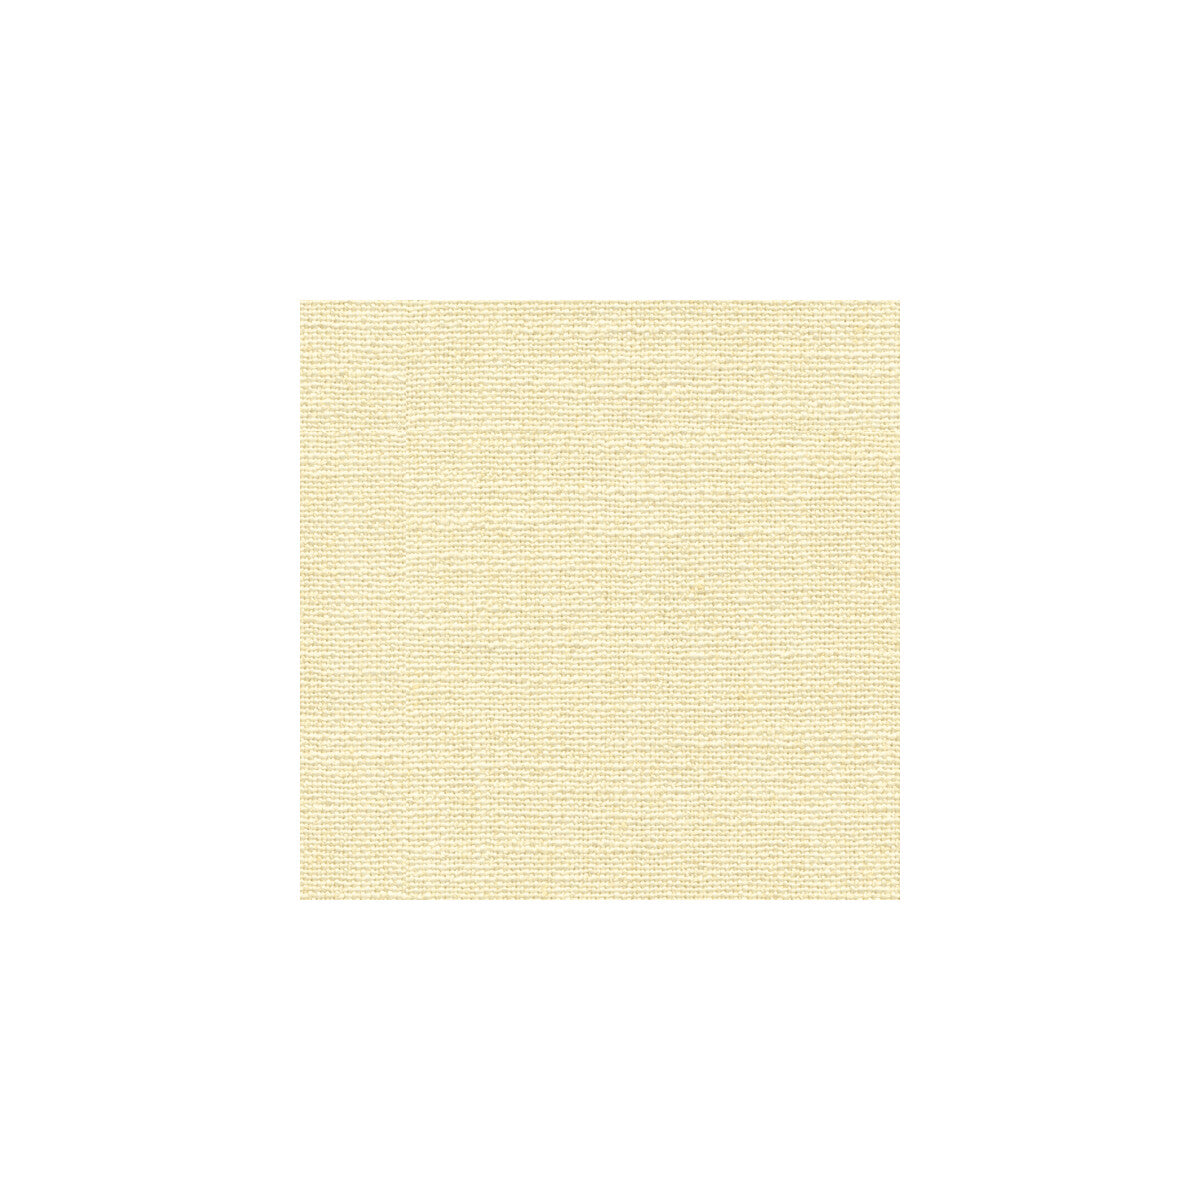 Kravet Smart fabric in 33140-1 color - pattern 33140.1.0 - by Kravet Smart in the Sarah Richardson Affinity collection